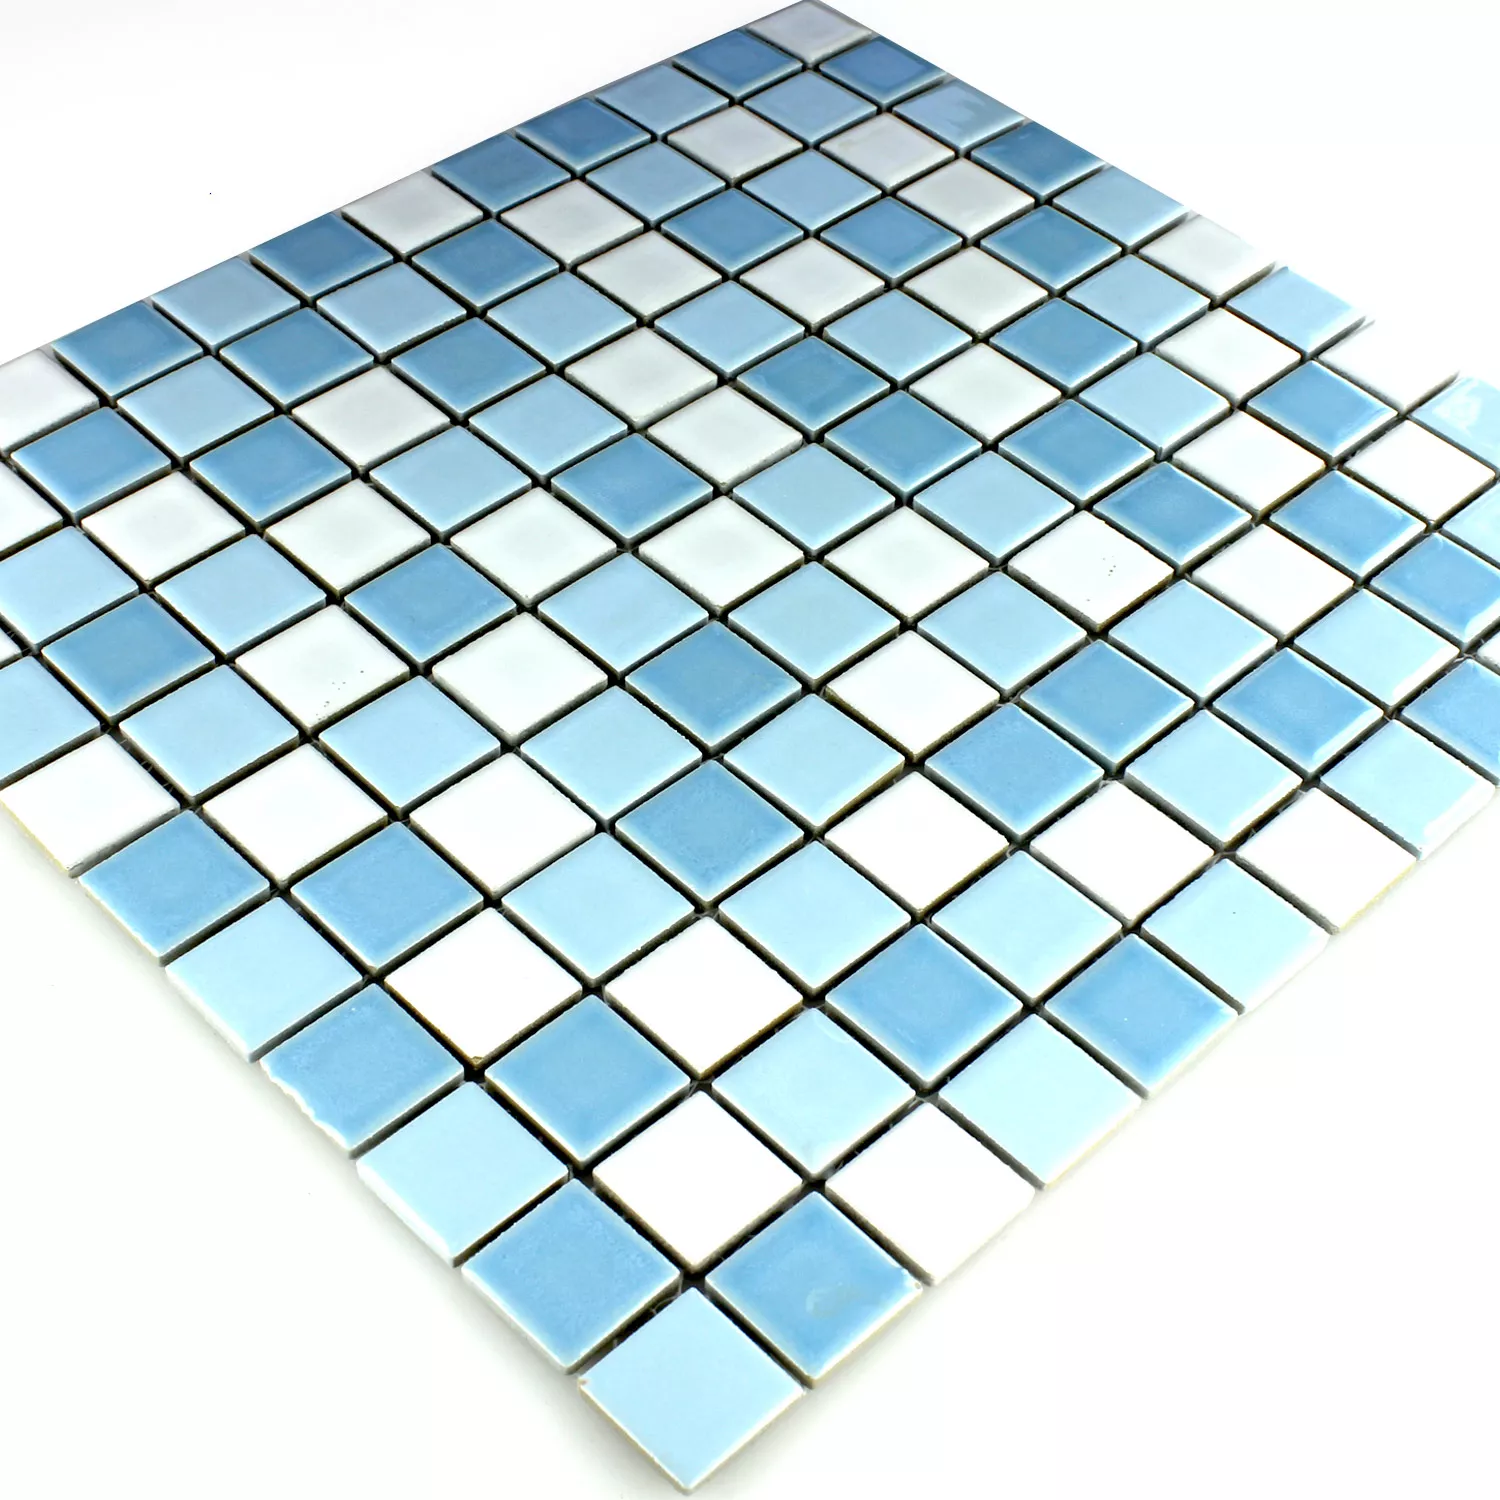 Mozaiková Dlaždice Keramika Bodaway Modrá Bílá 25x25x5mm